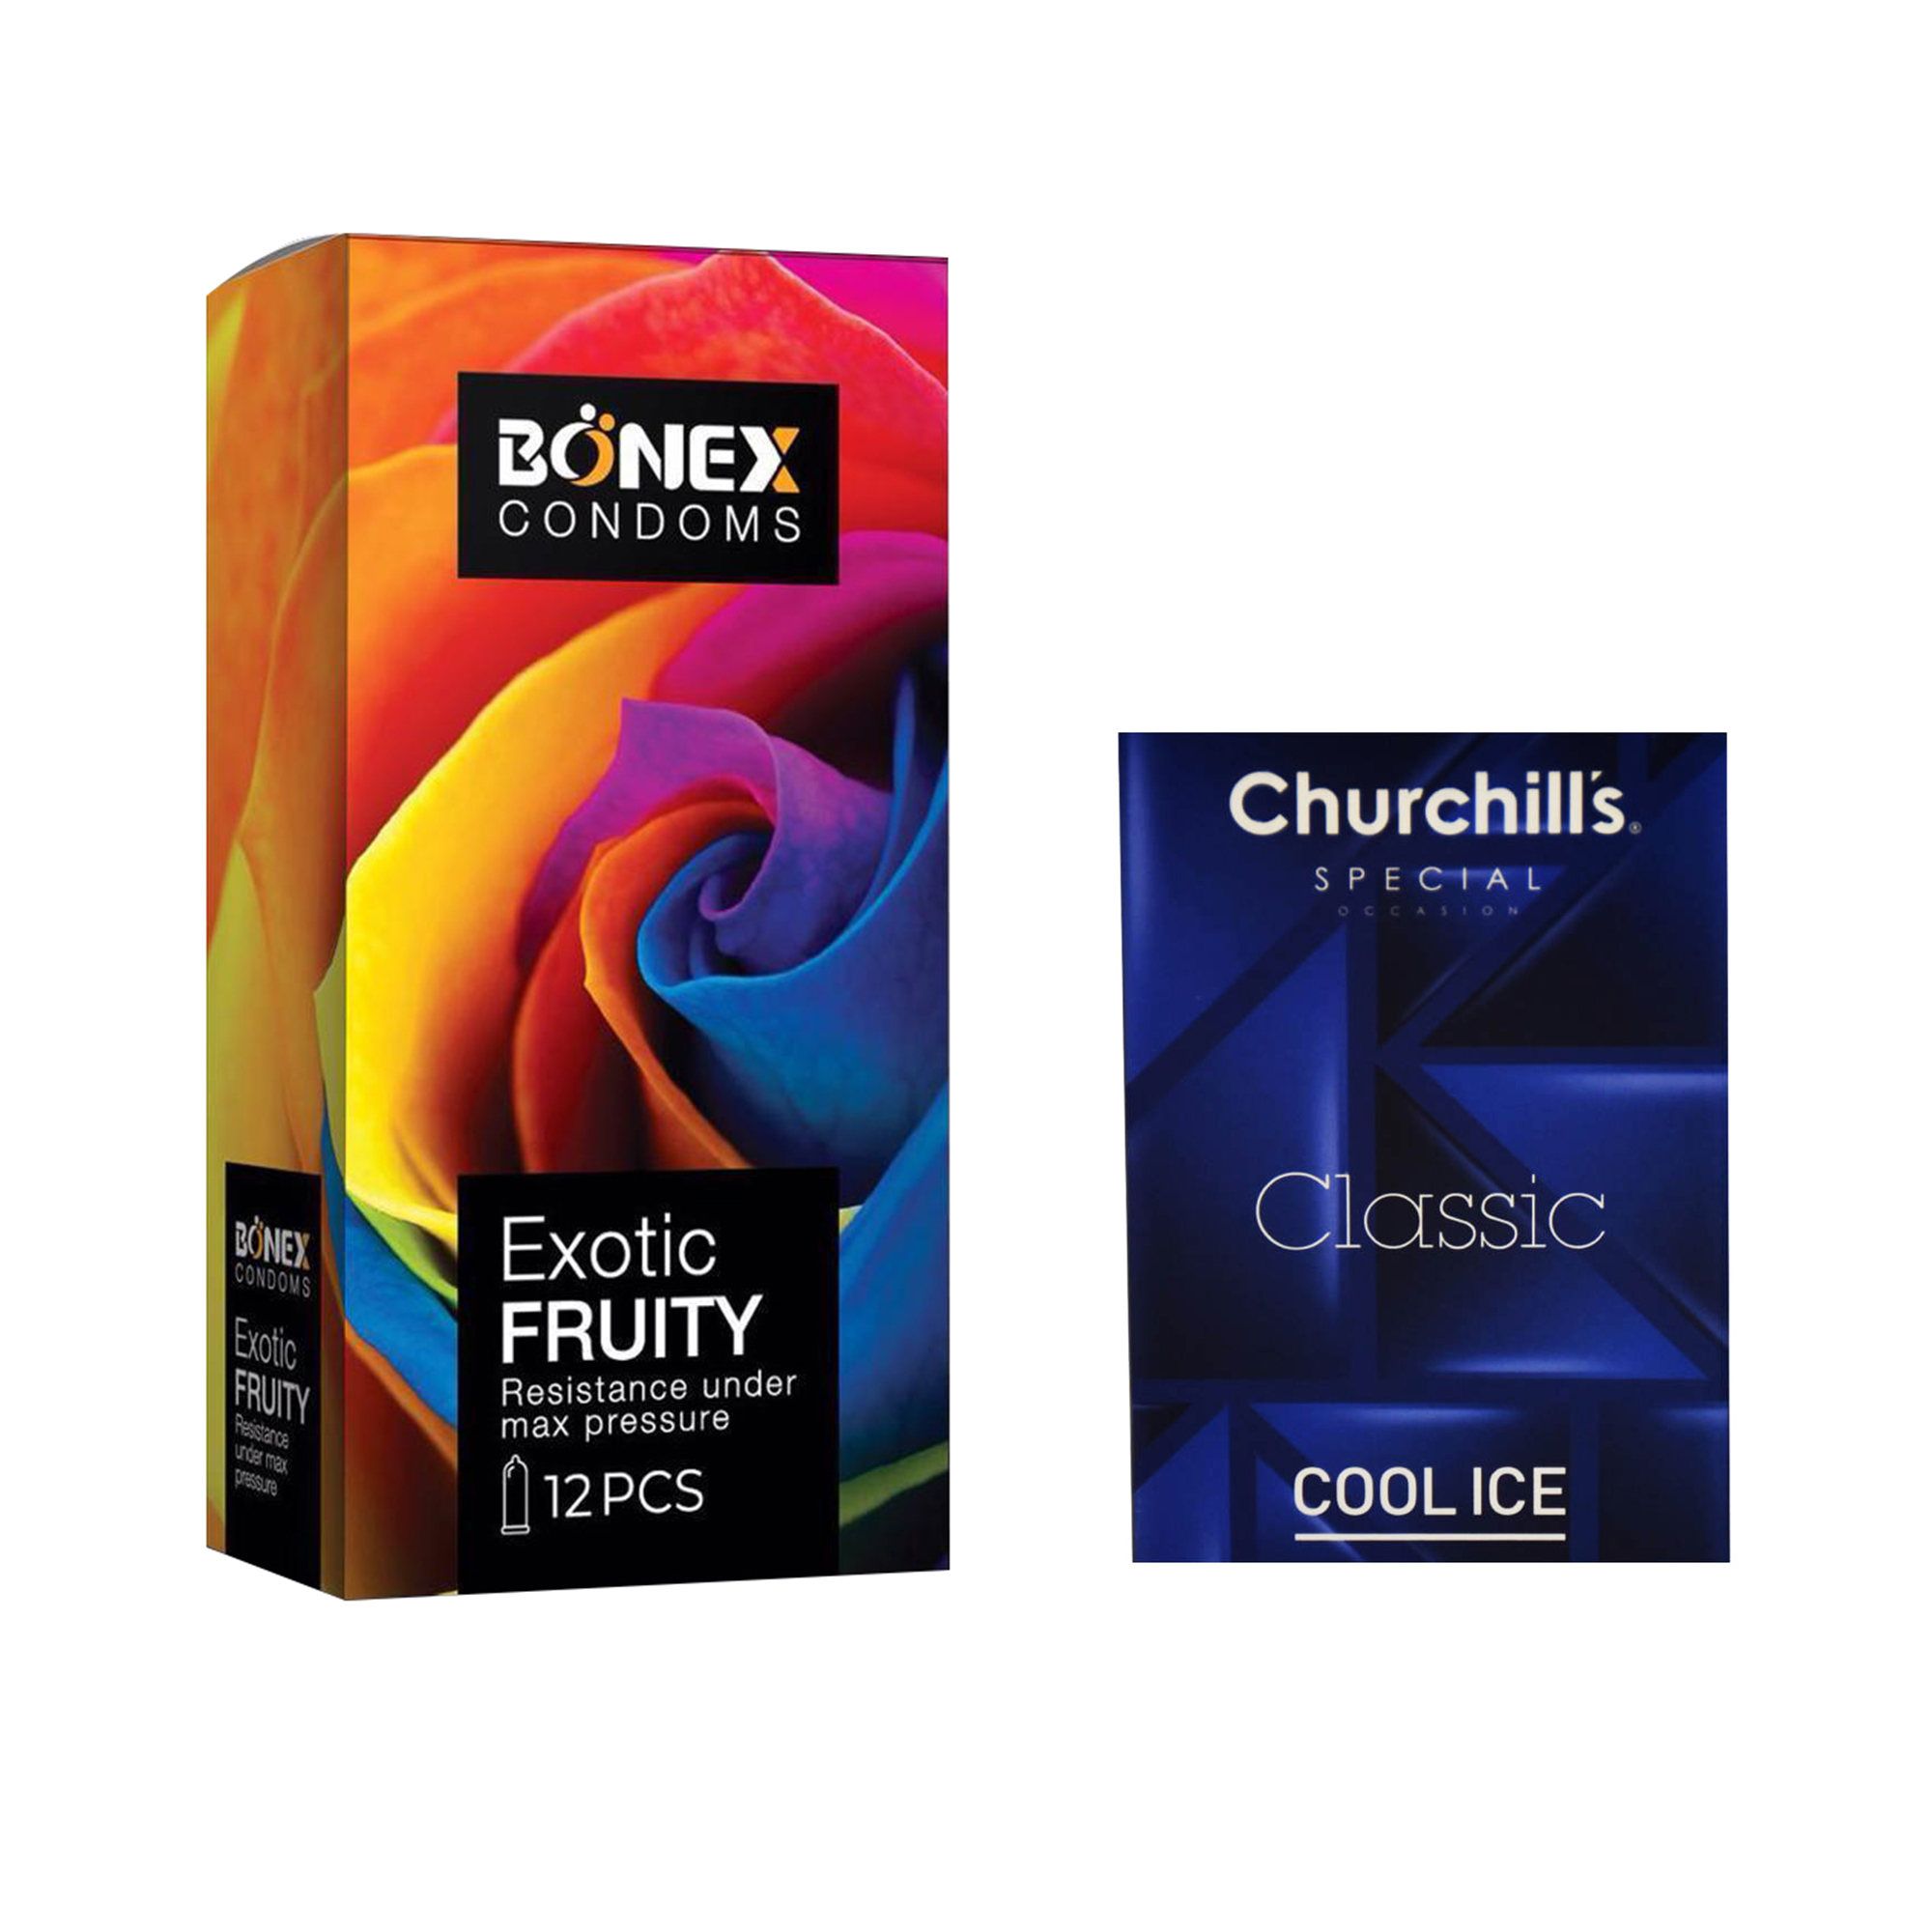 کاندوم بونکس مدل Exotic Fruity بسته 12 عددی به همراه کاندوم چرچیلز مدل Cool Ice بسته 3 عددی